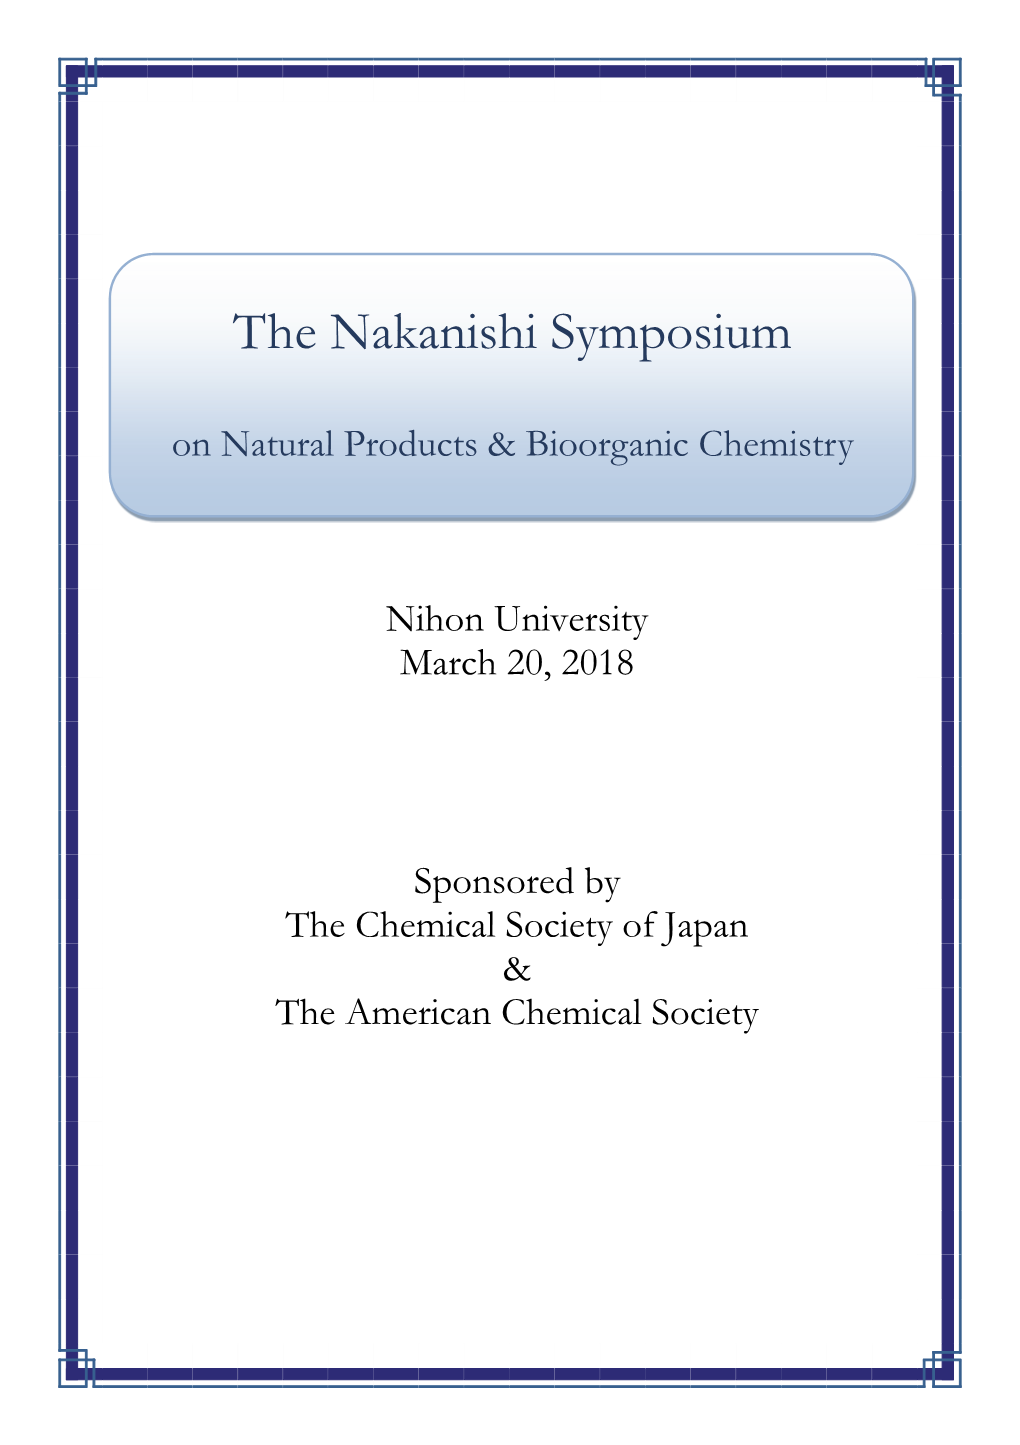 The Nakanishi Symposium on Natural Products & Bioorganic Chemistry